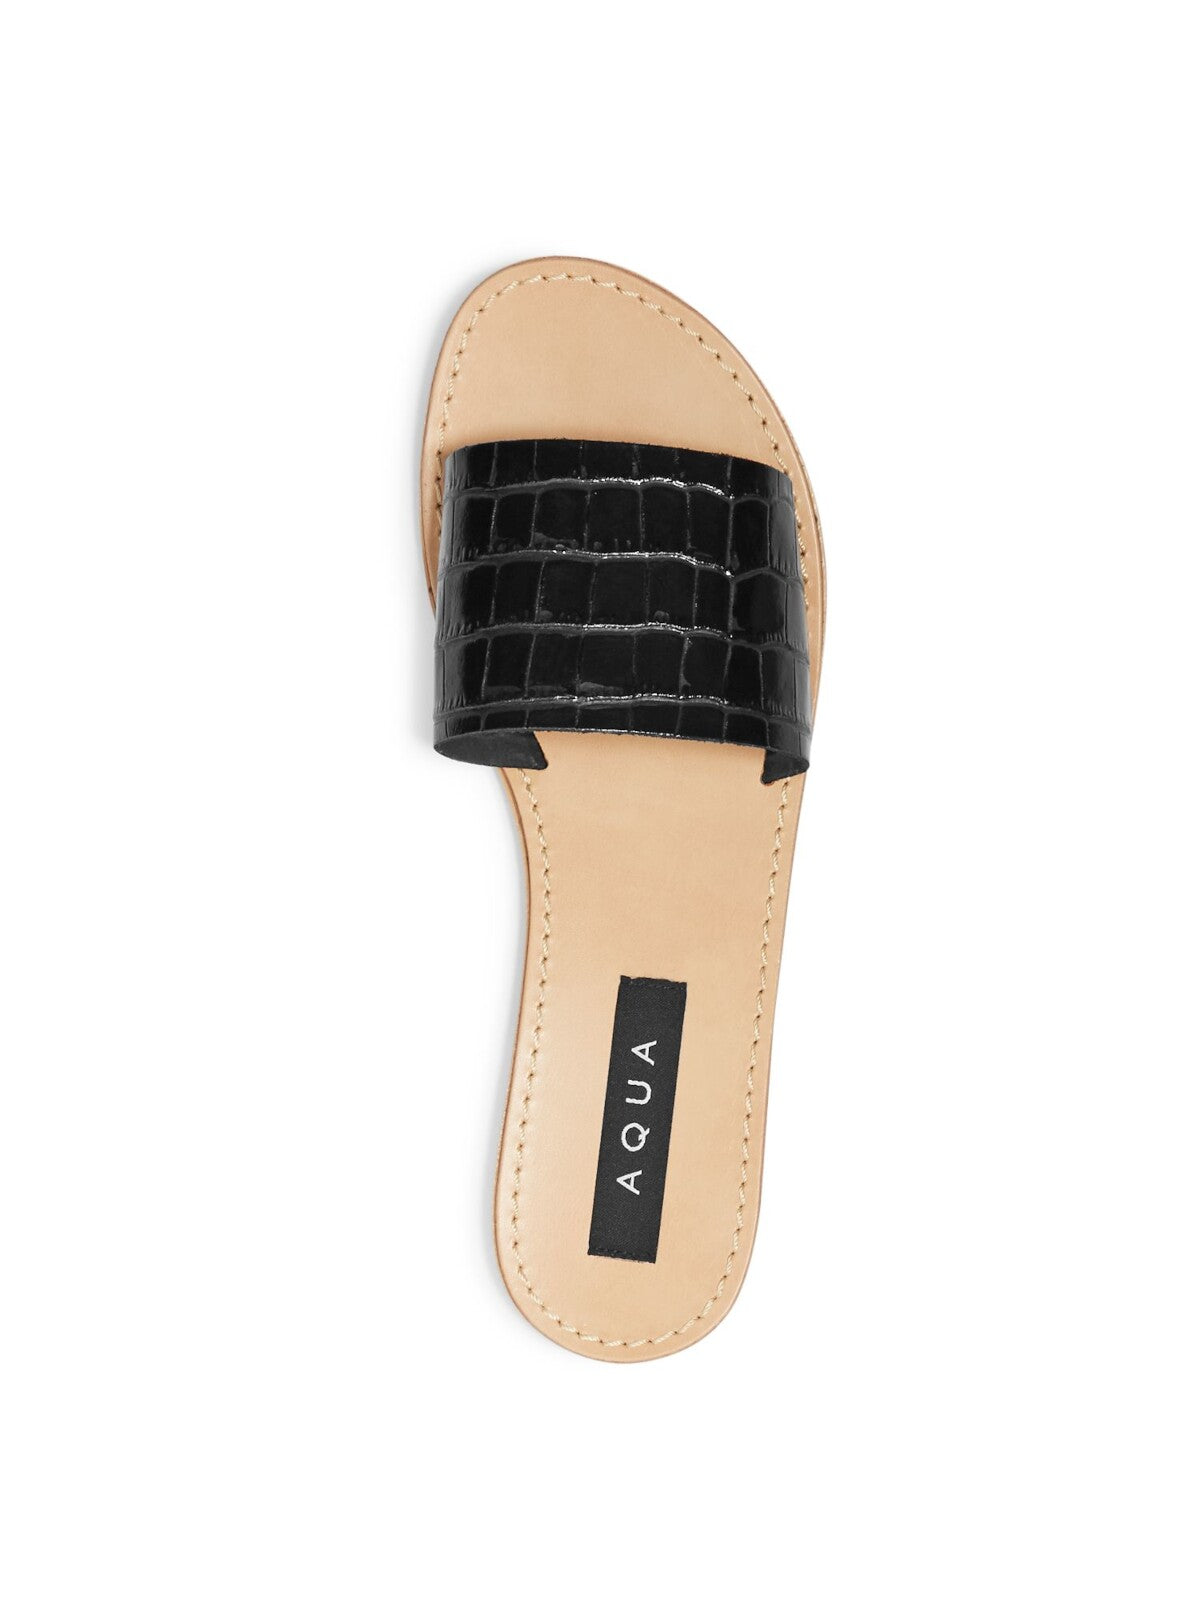 AQUA Womens Black Croc Embossed Slide Round Toe Block Heel Slip On Leather Slide Sandals Shoes